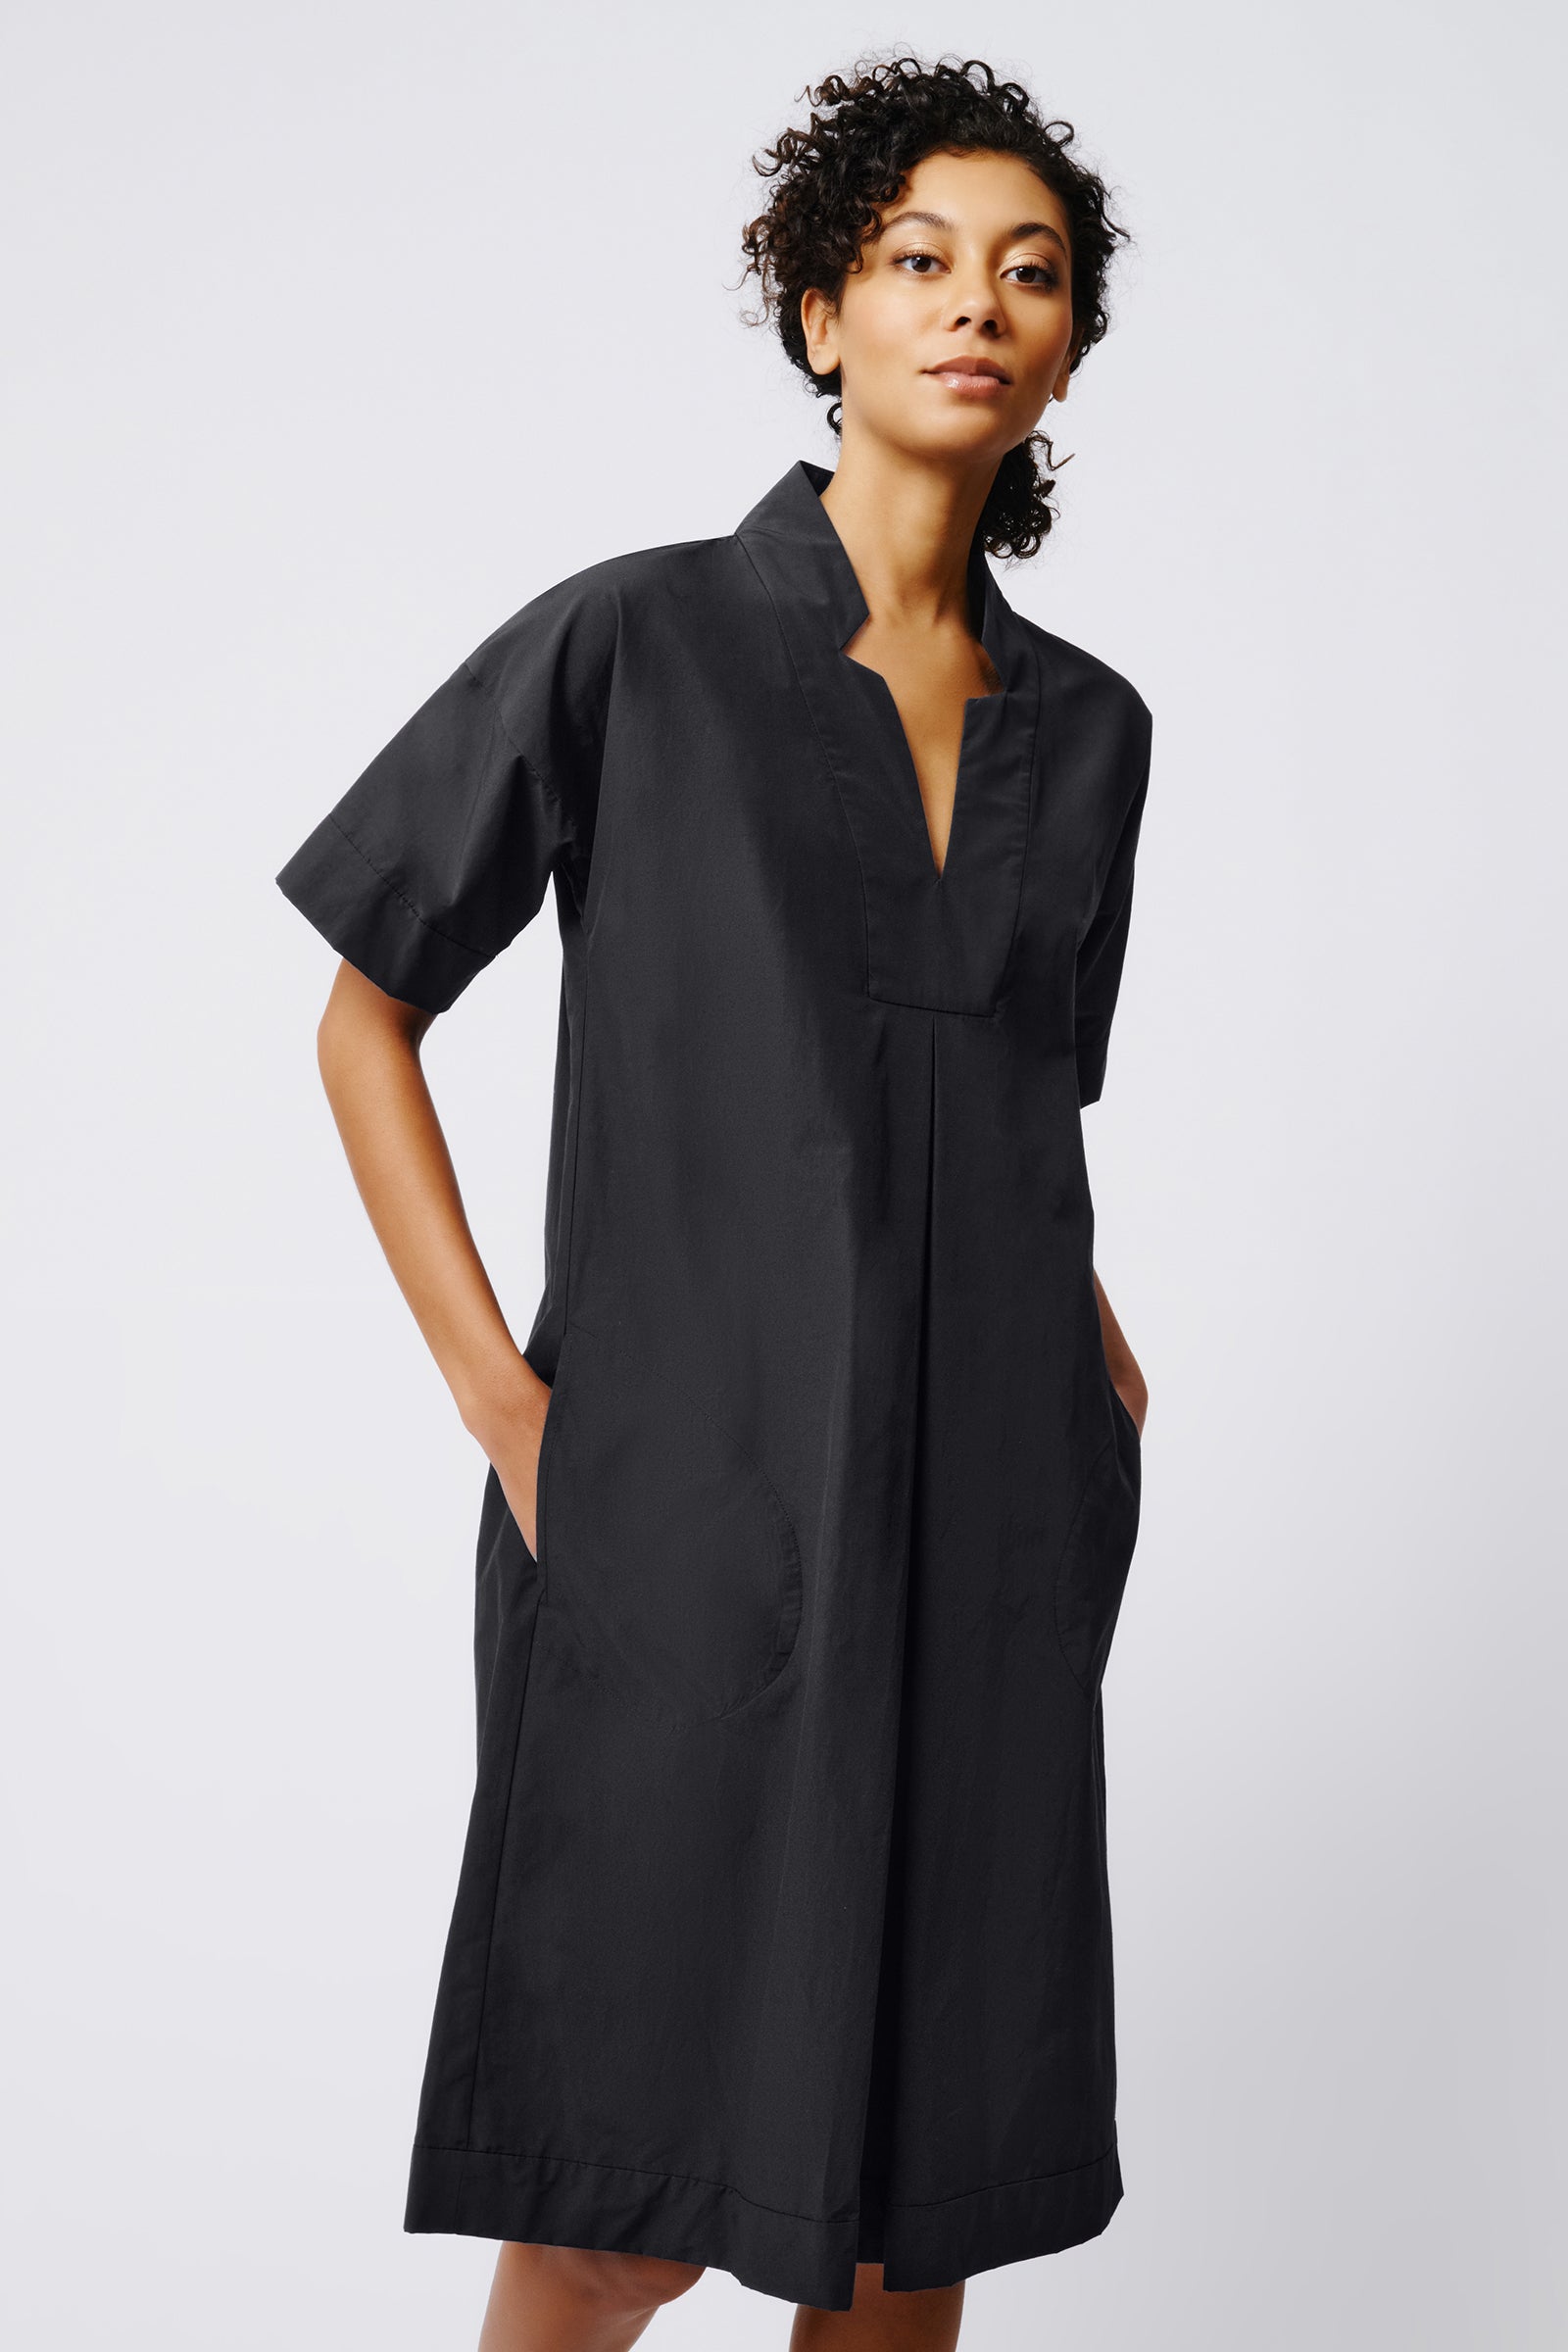 Kal Rieman Notch Placket Dress in Black on Model Front View Crop 3